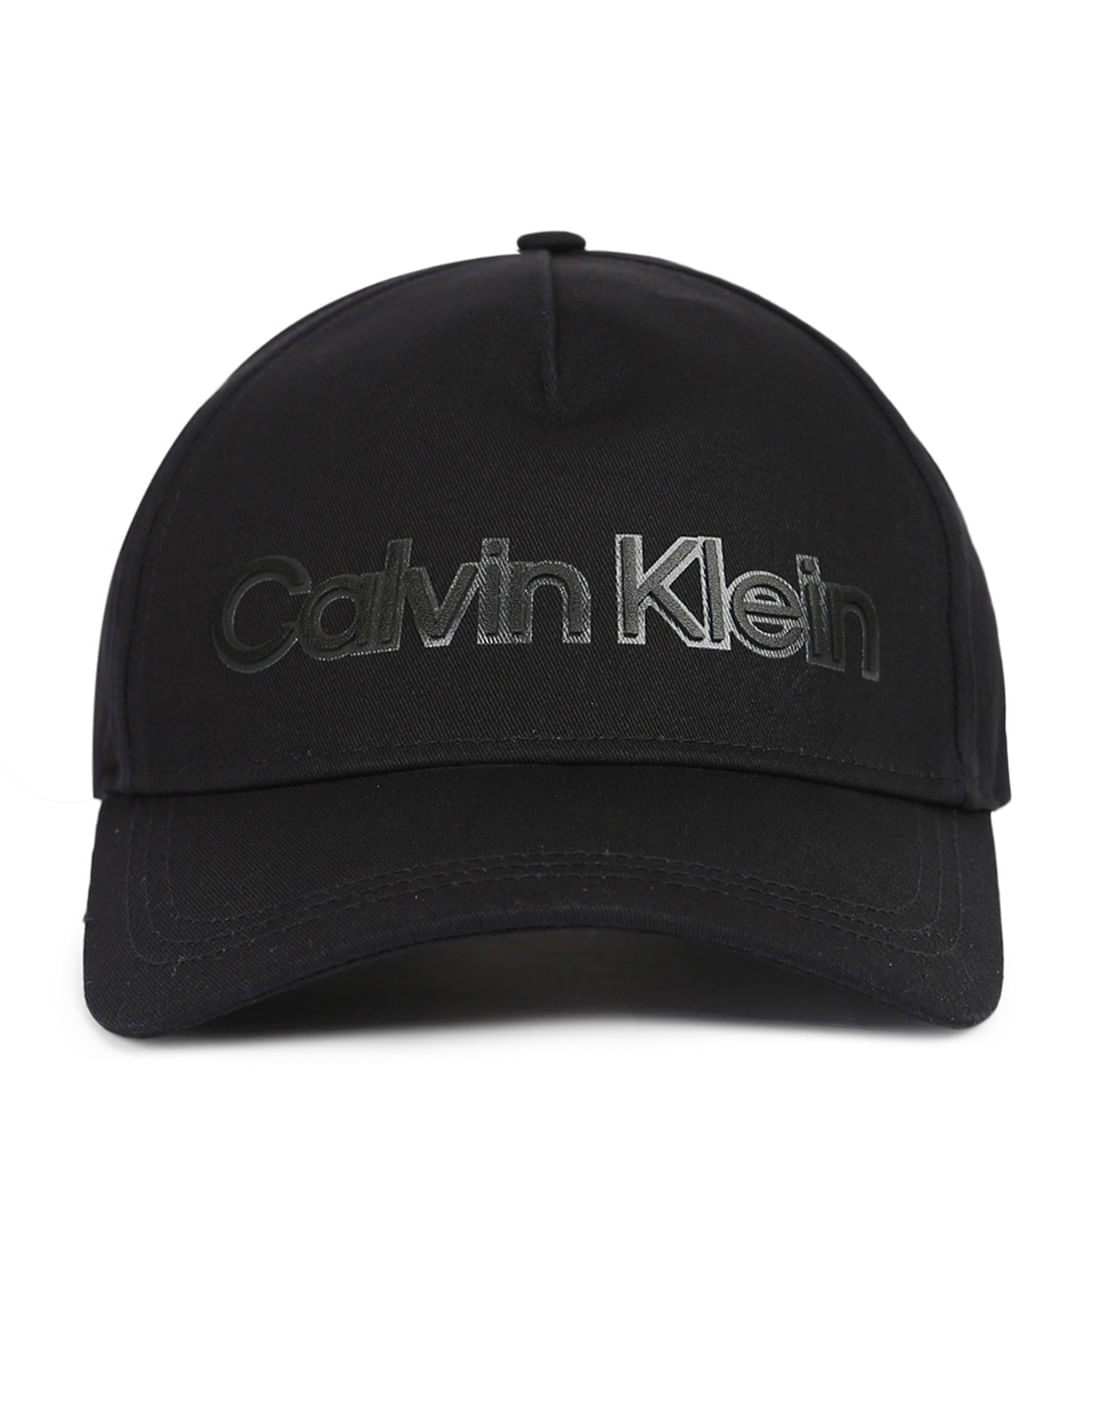 Buy Calvin Klein Men Black Leather Lettering Cap - NNNOW.com